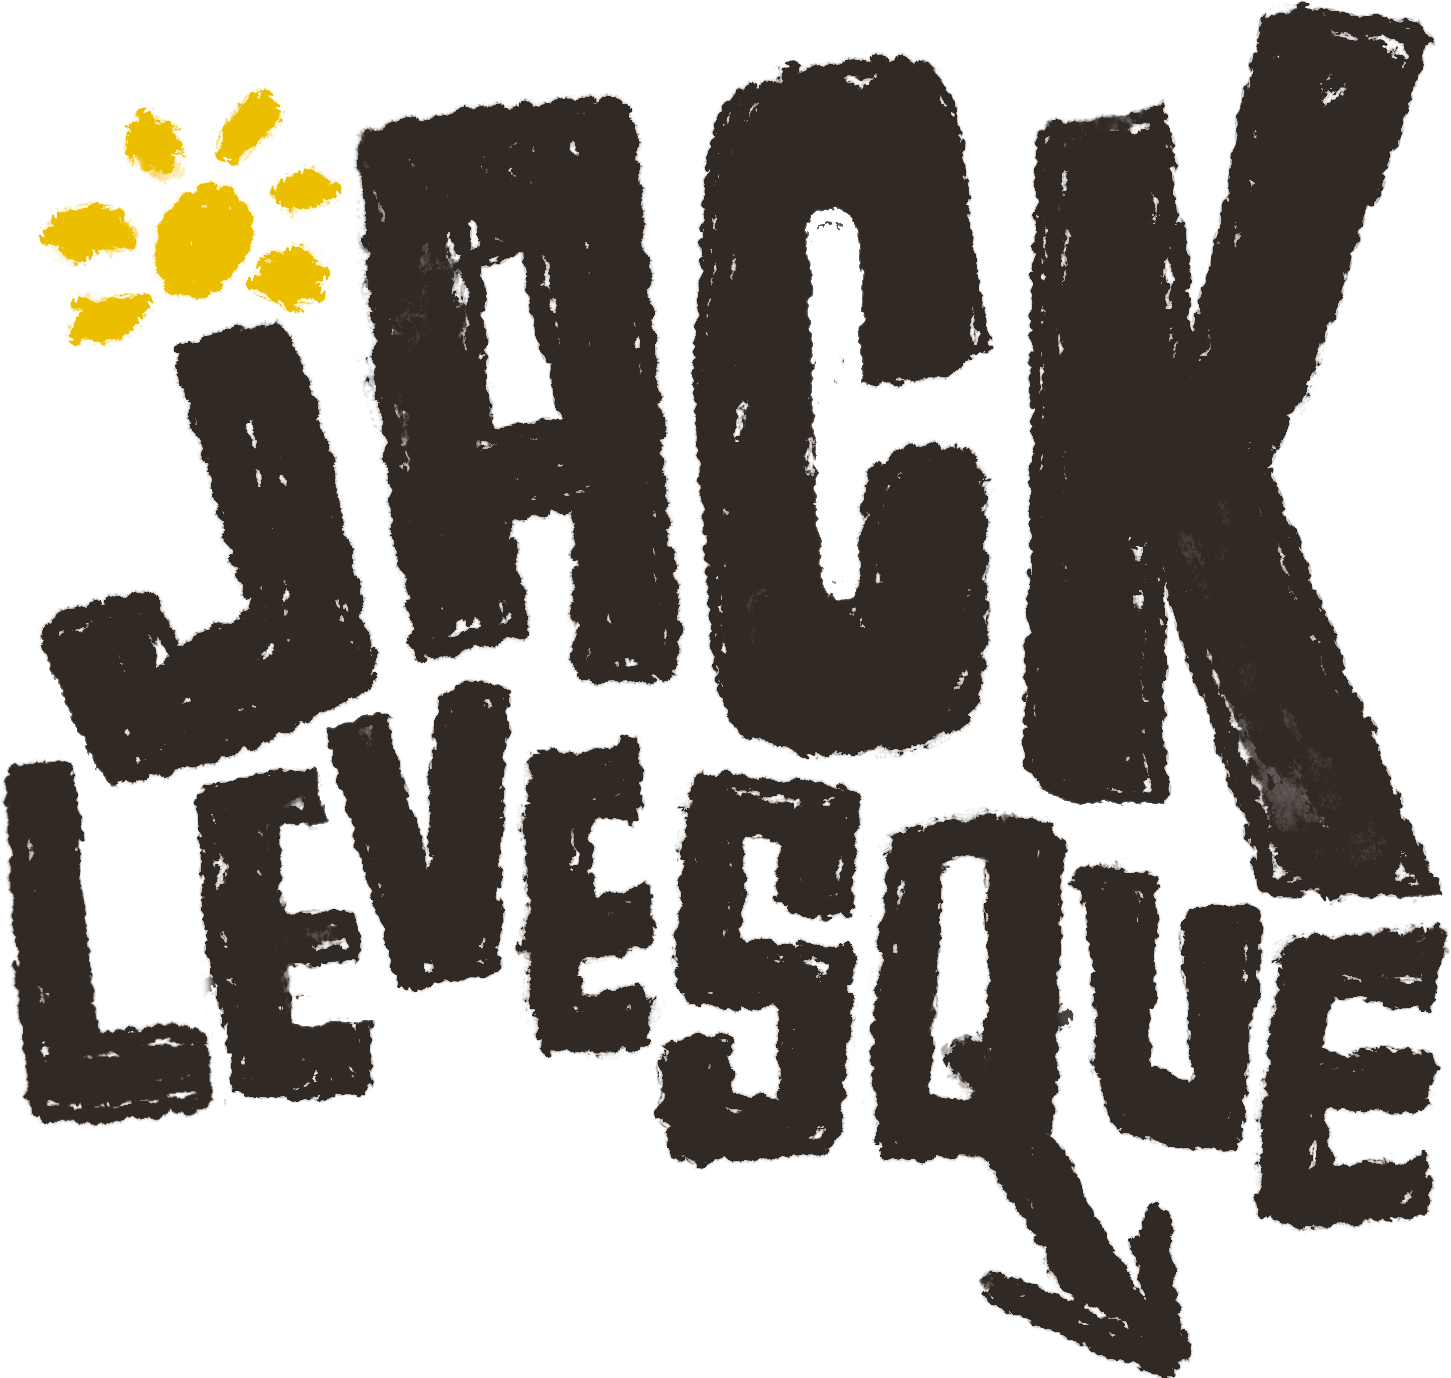 Jack Levesque